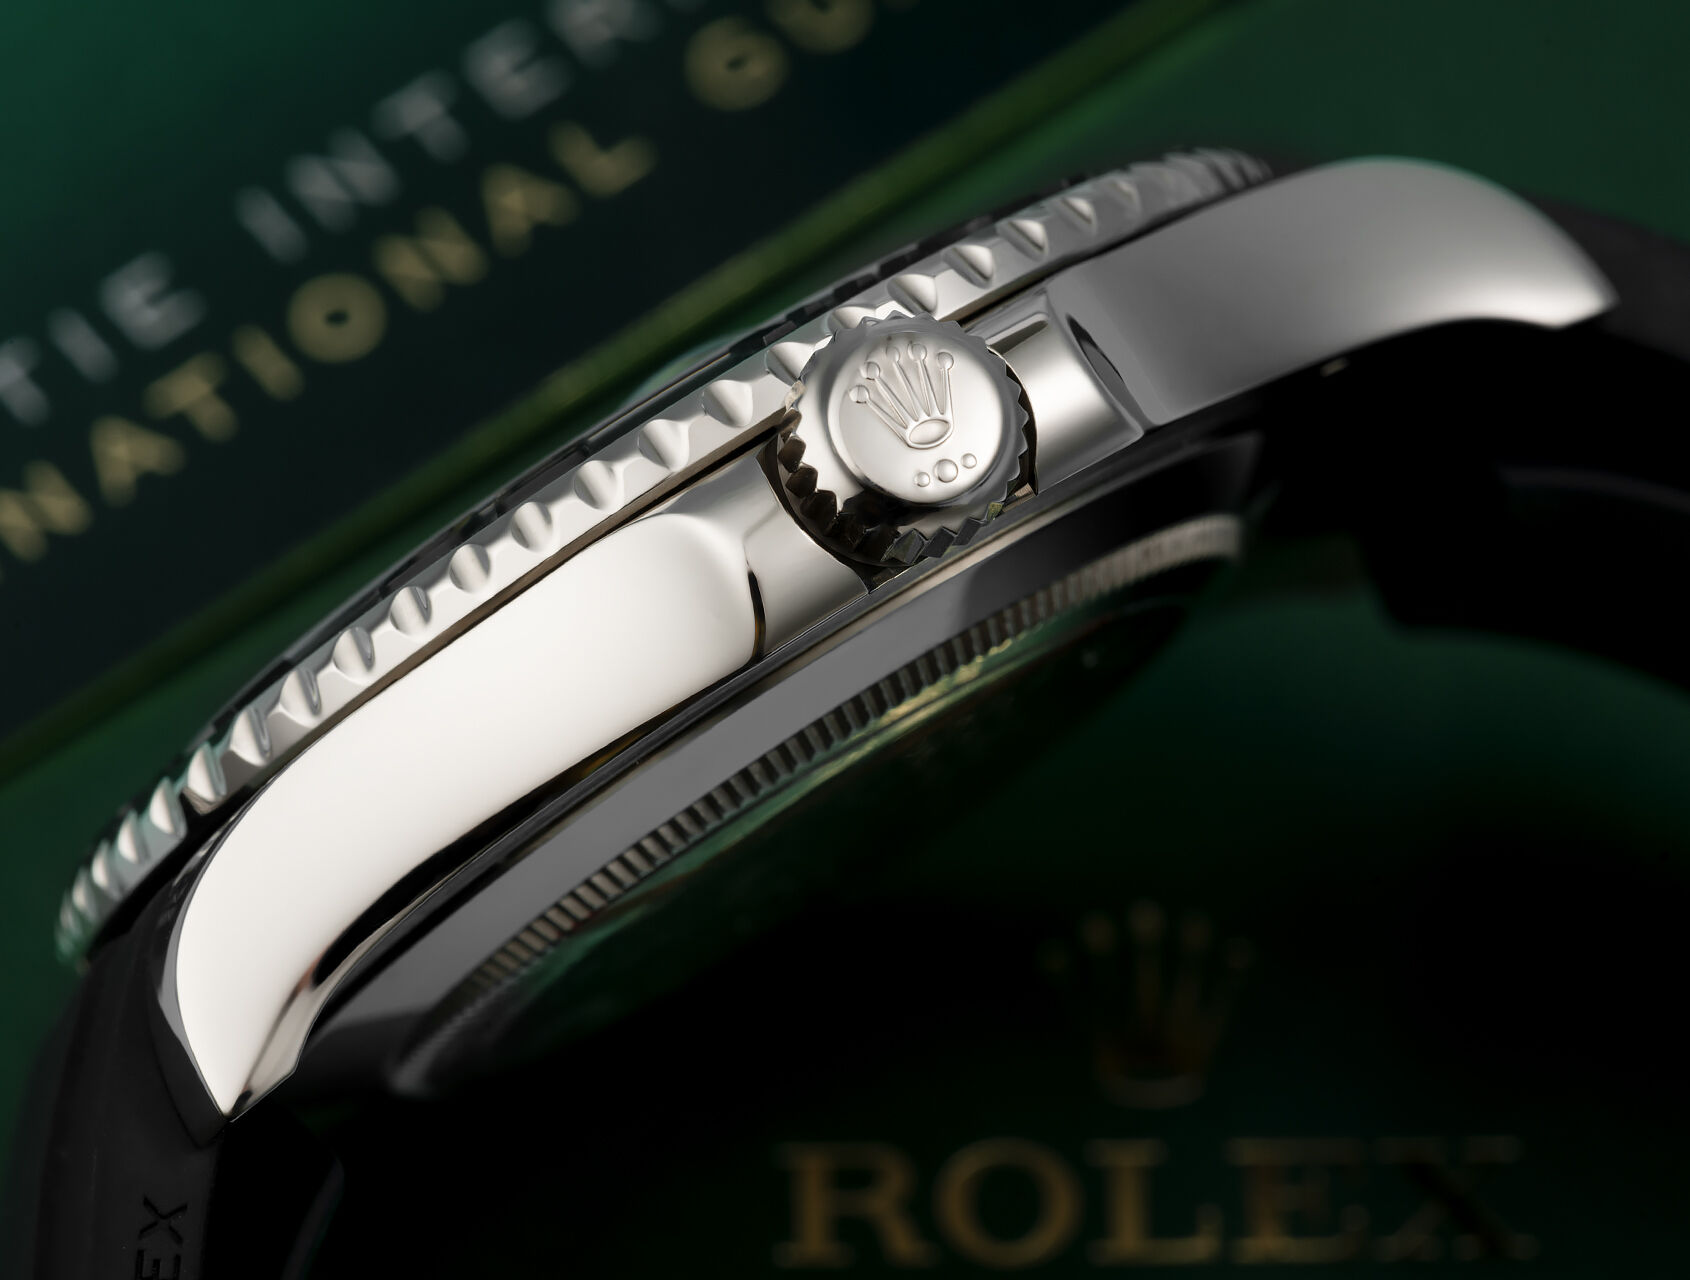 ref 226659 | 226659 - Box & Certificate | Rolex Yacht-Master